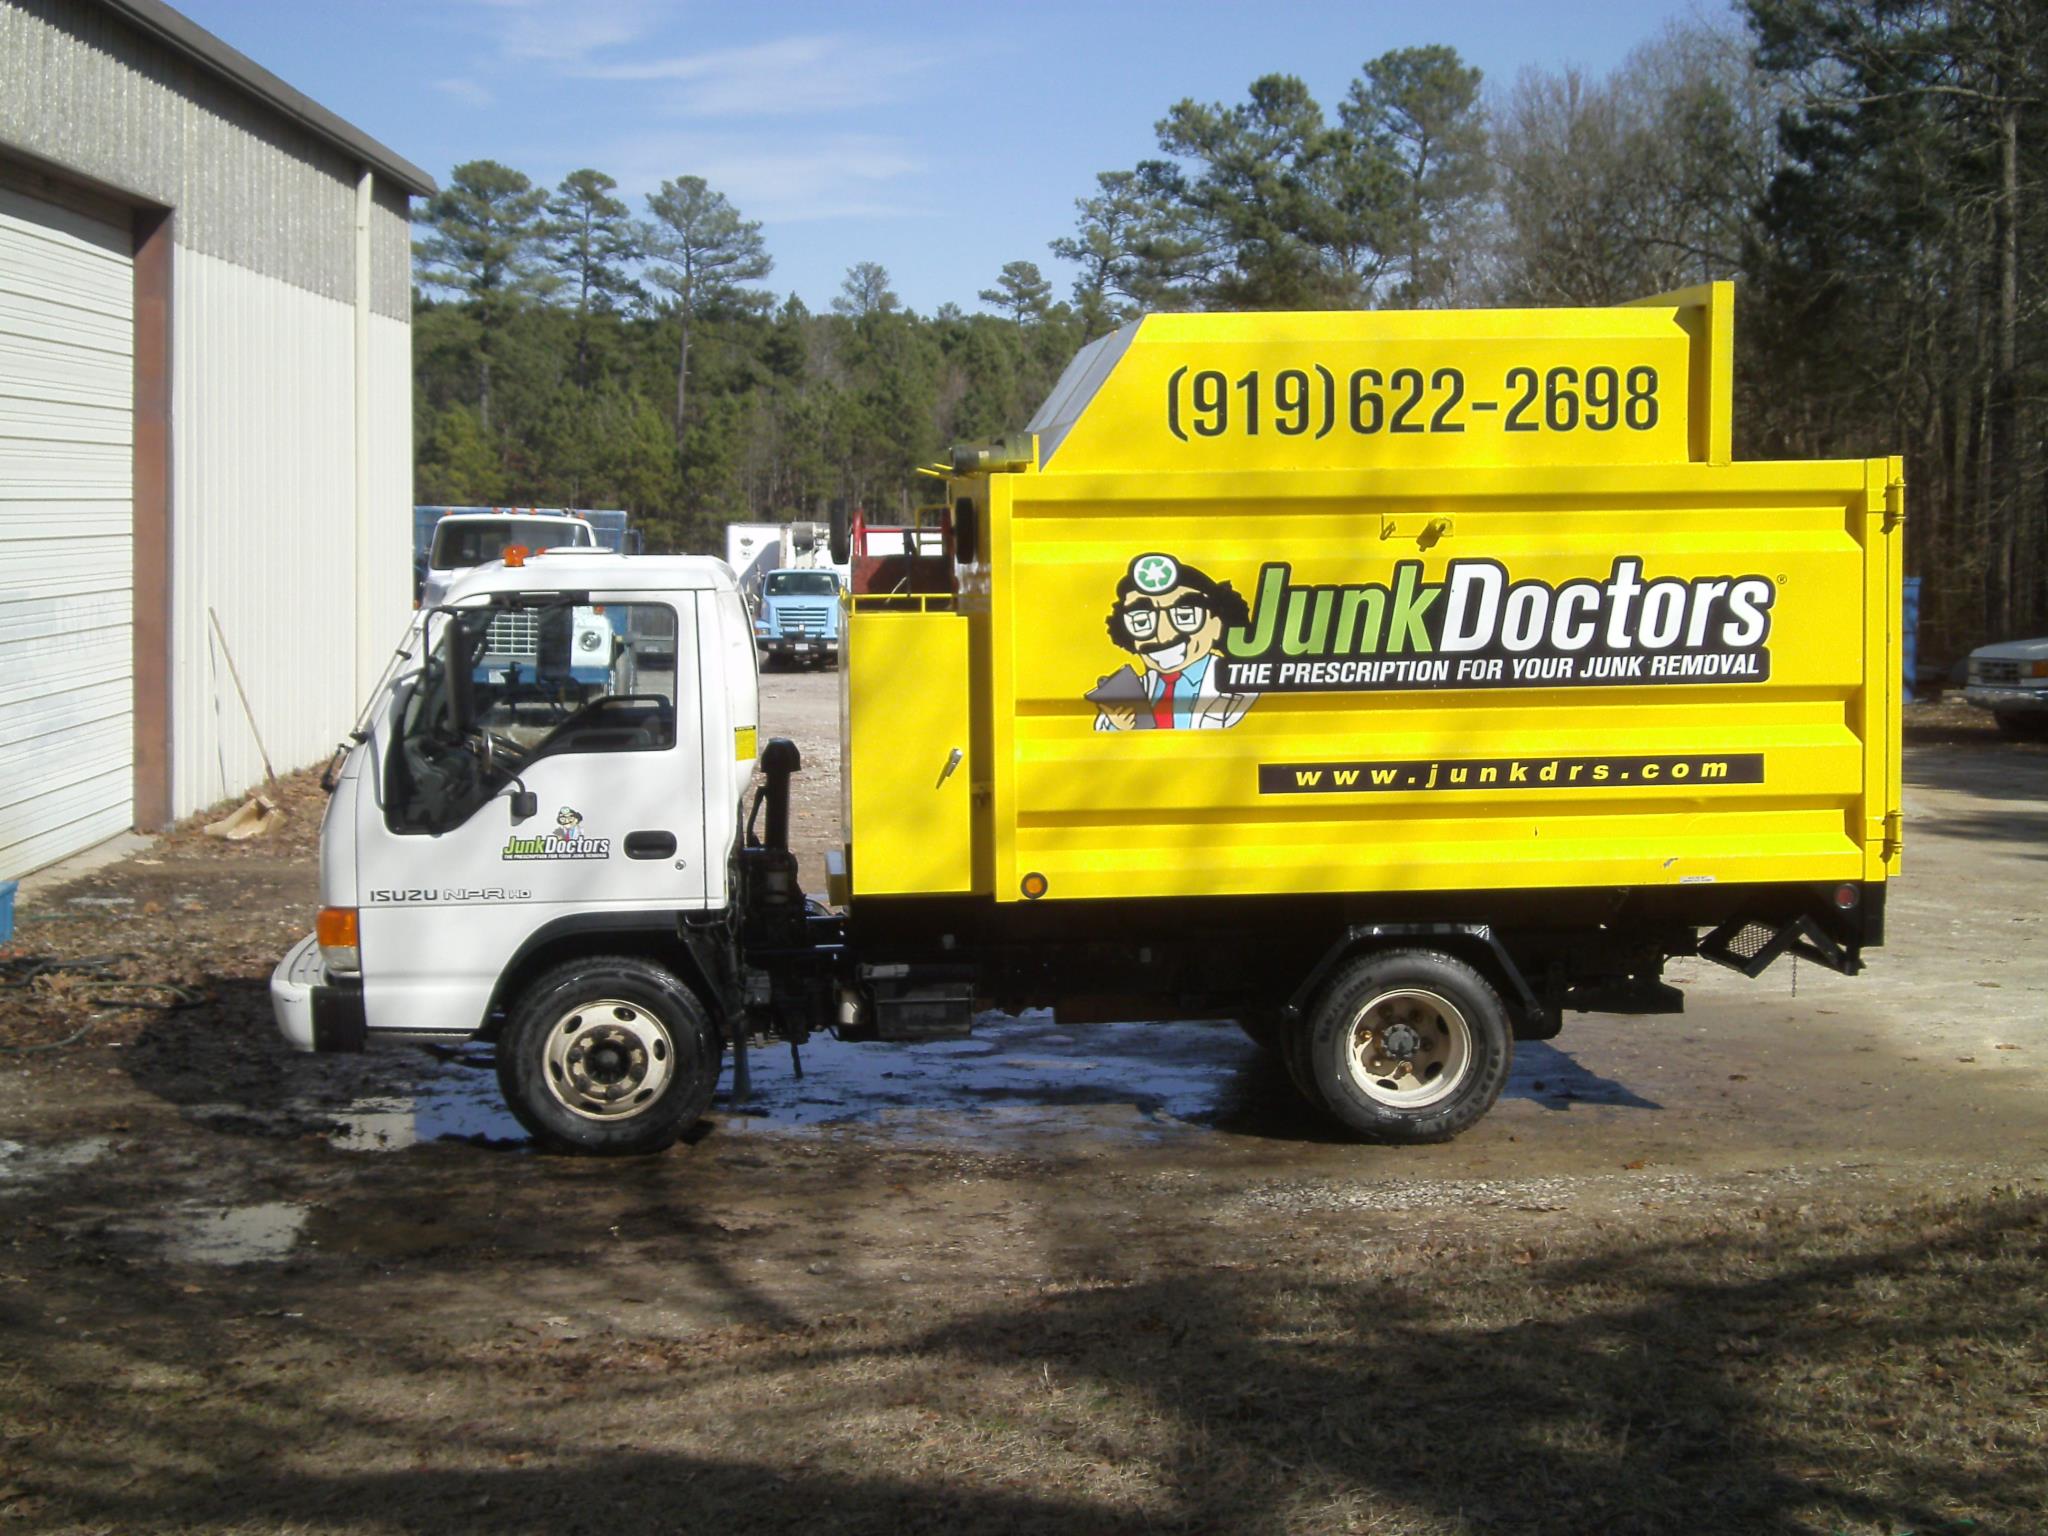 Junk Doctors truck at a legal dump site in North Carolina